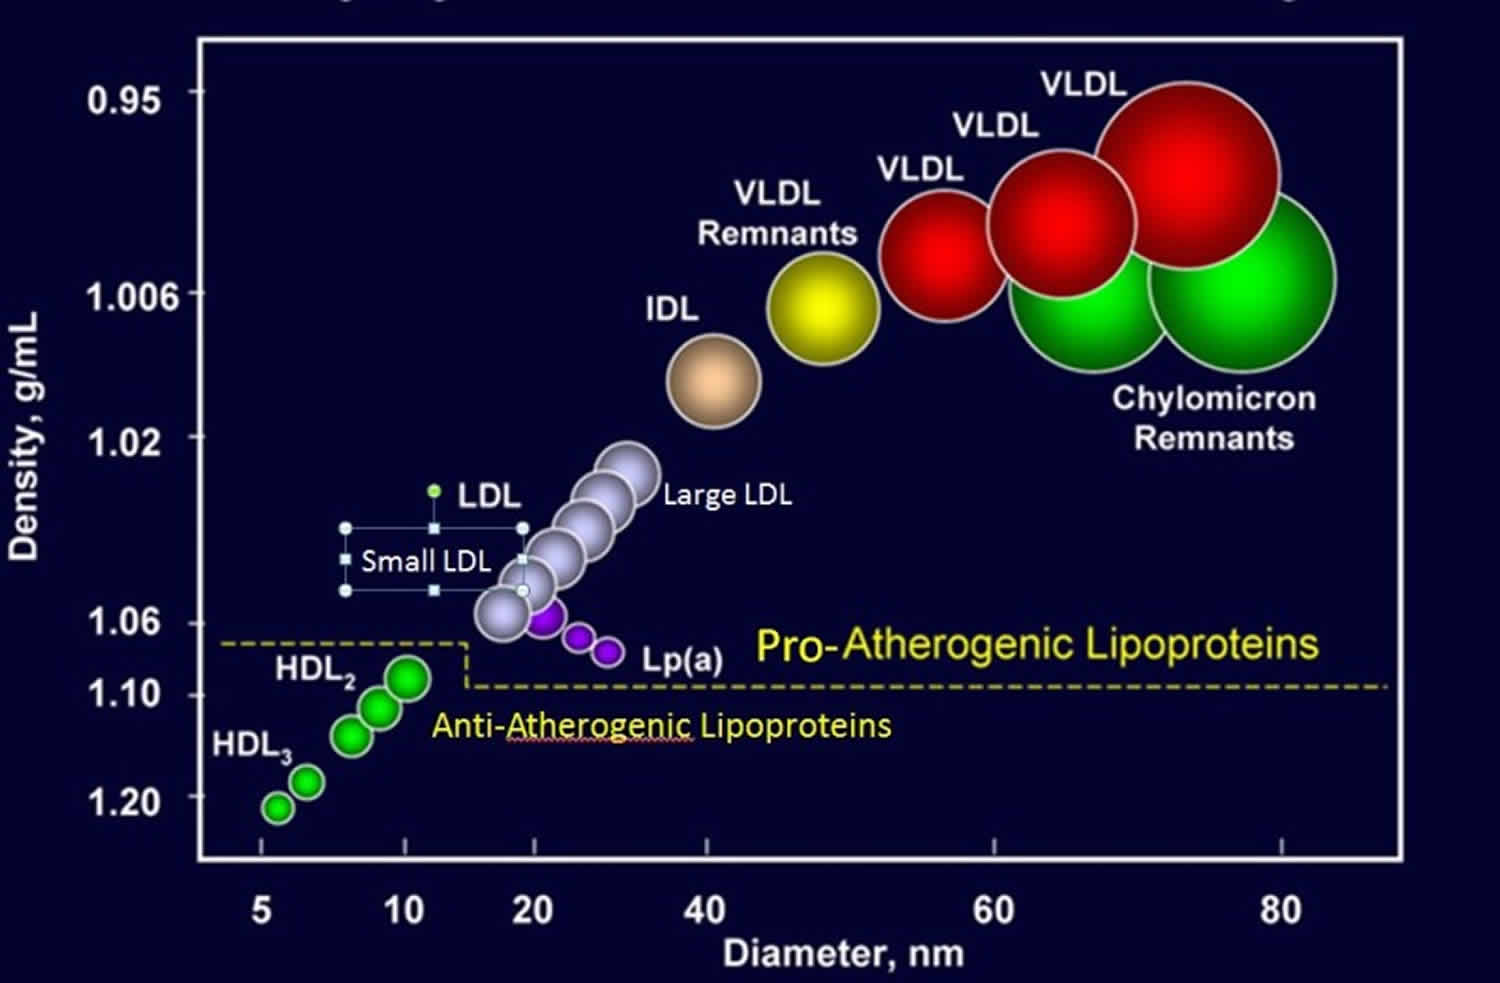 Types of Lipoprotein